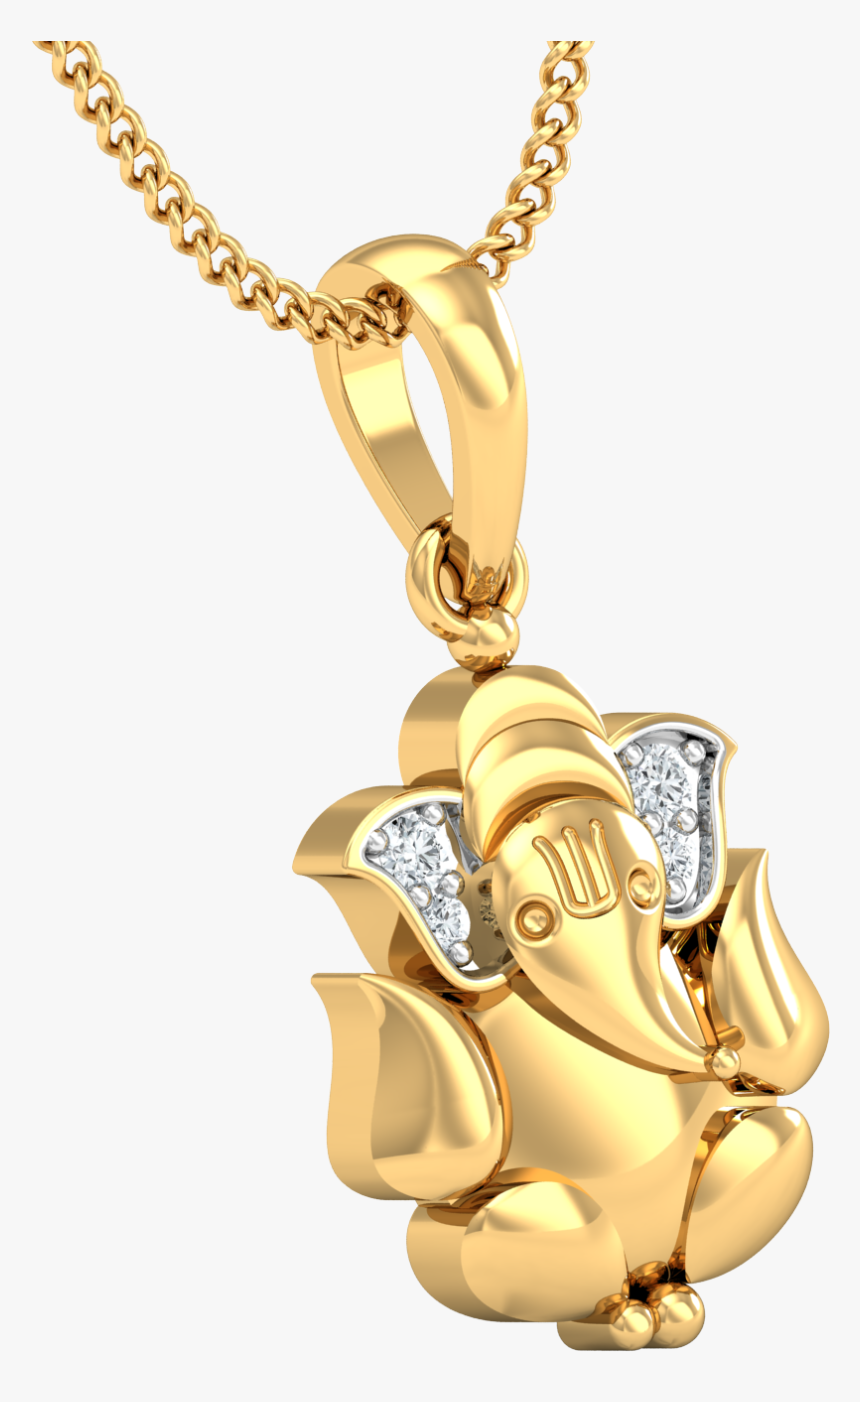 Ganesha Pendant - Gold Ganesh Pendant Designs, HD Png Download, Free Download